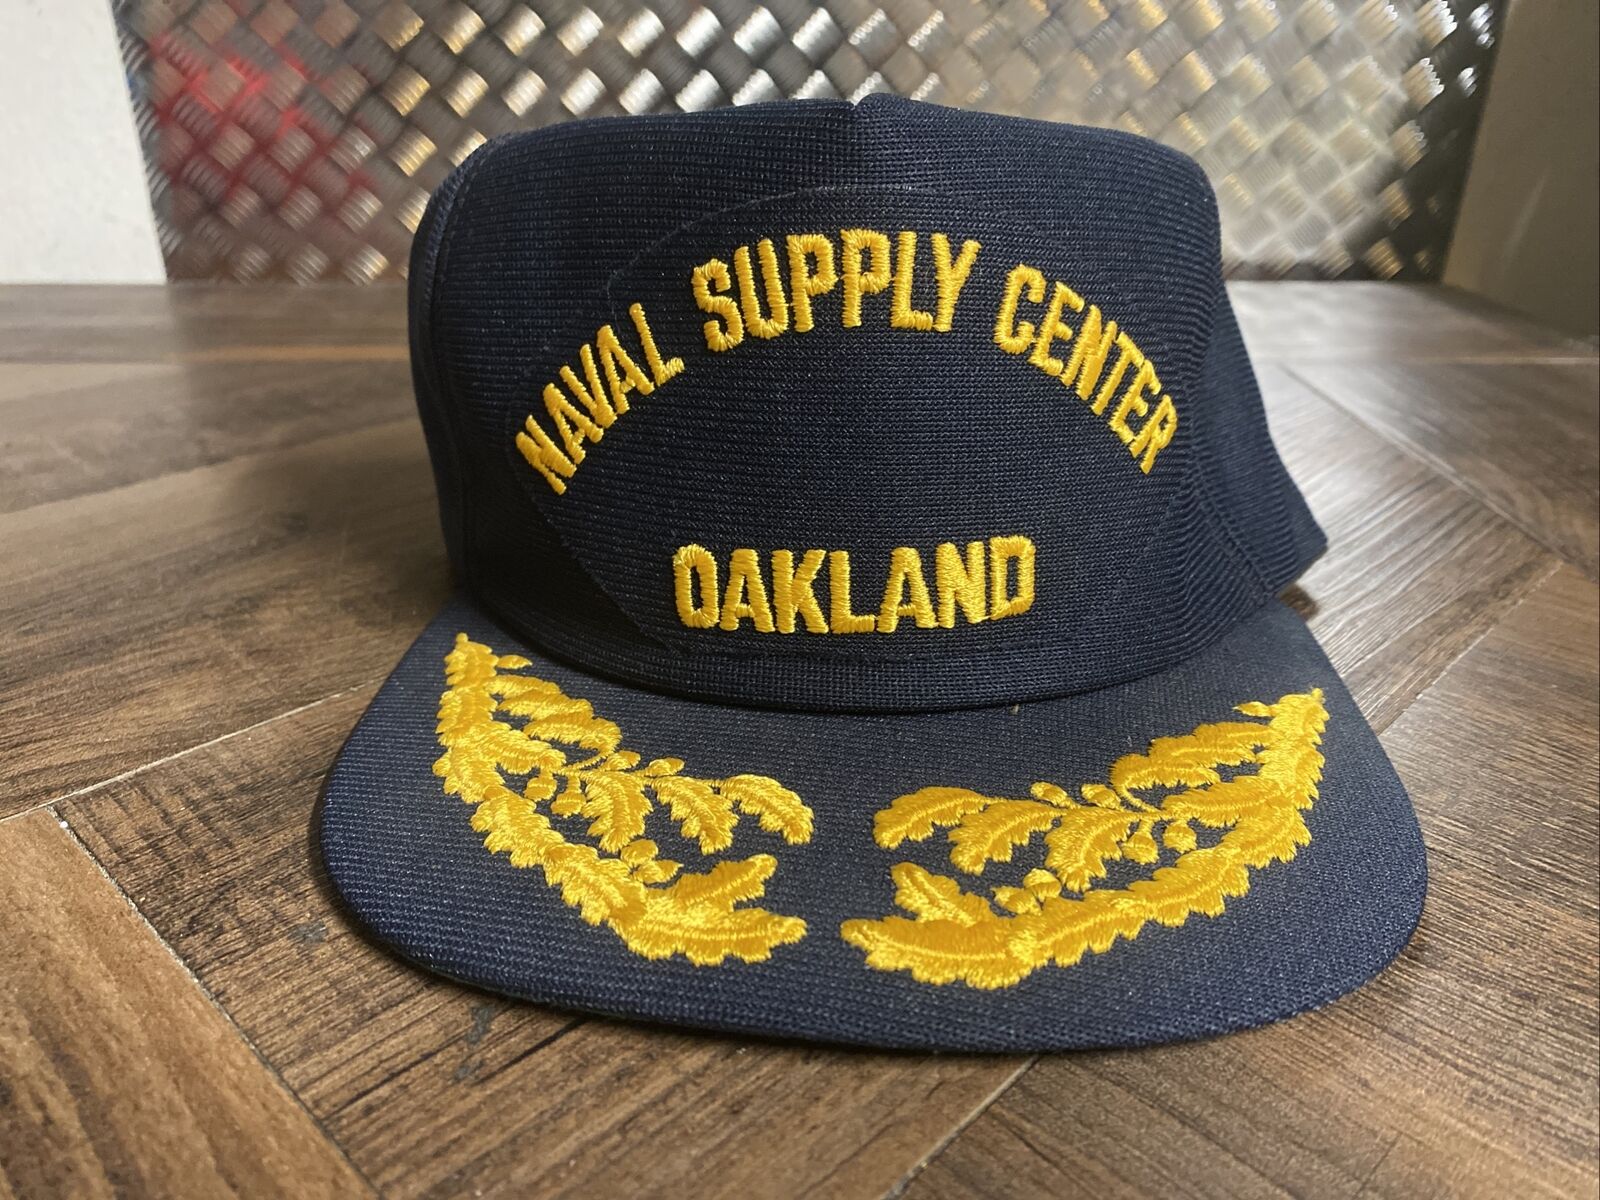 Vintage 80's or 90's Naval Supply Center Oakland Hat